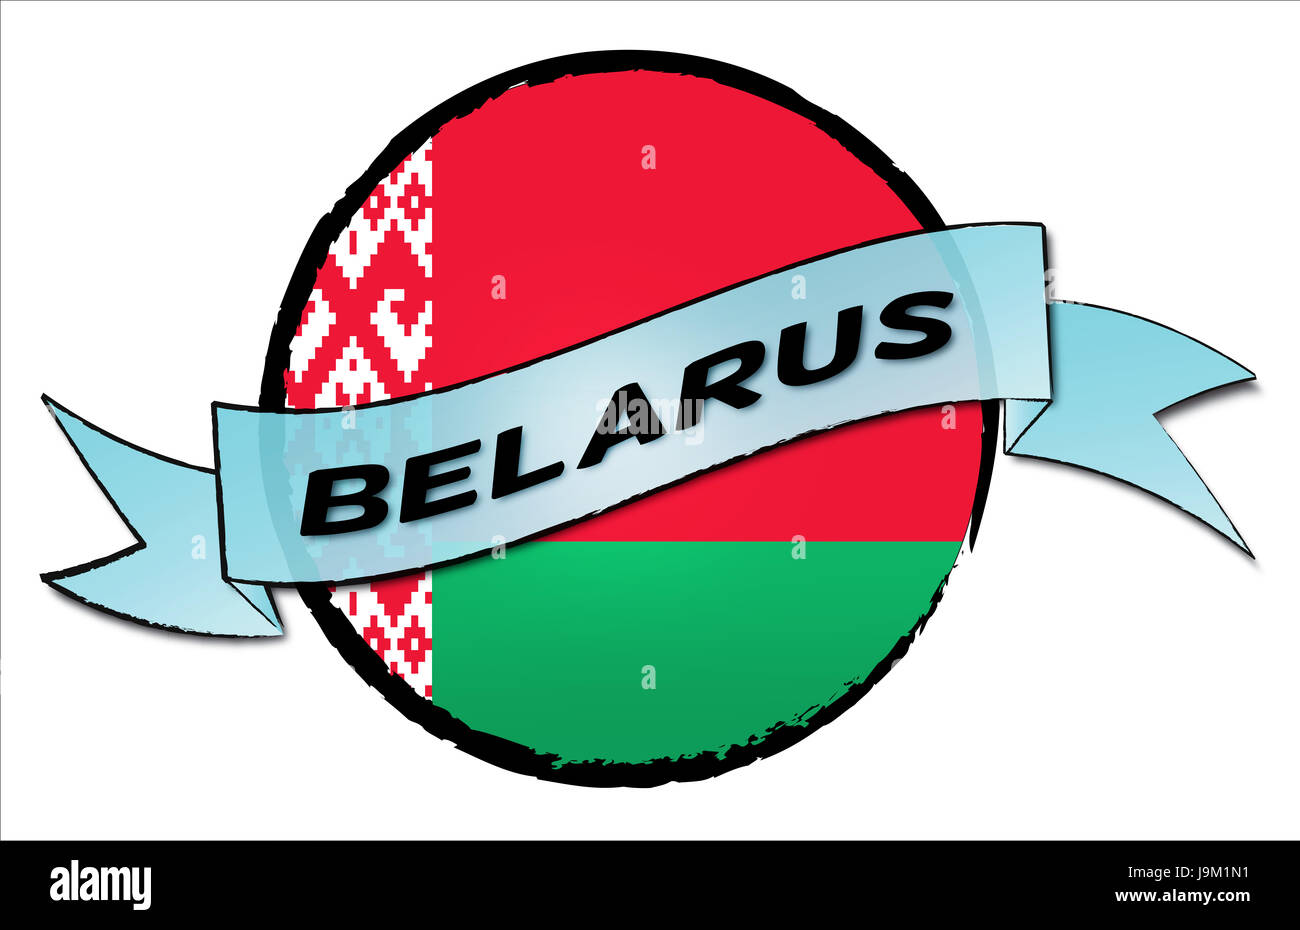 Union, Belarus, Flagge, Reise, Button, Banner, Union, Land, Land, Russland, Vane, Stockfoto